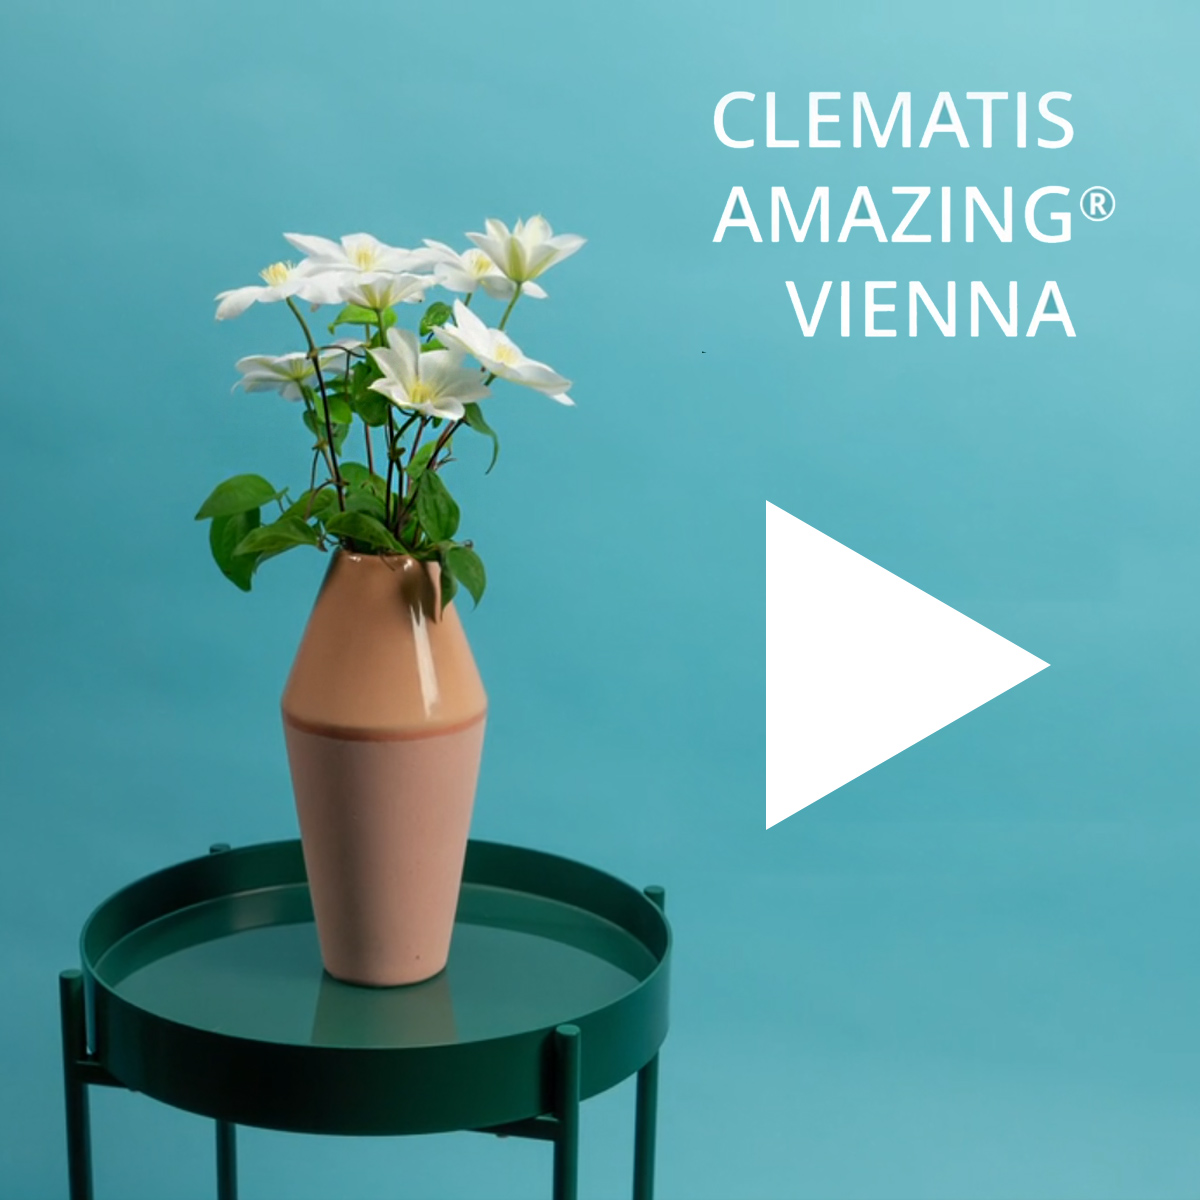 Clematis Amazing Vienna video - on Thursd